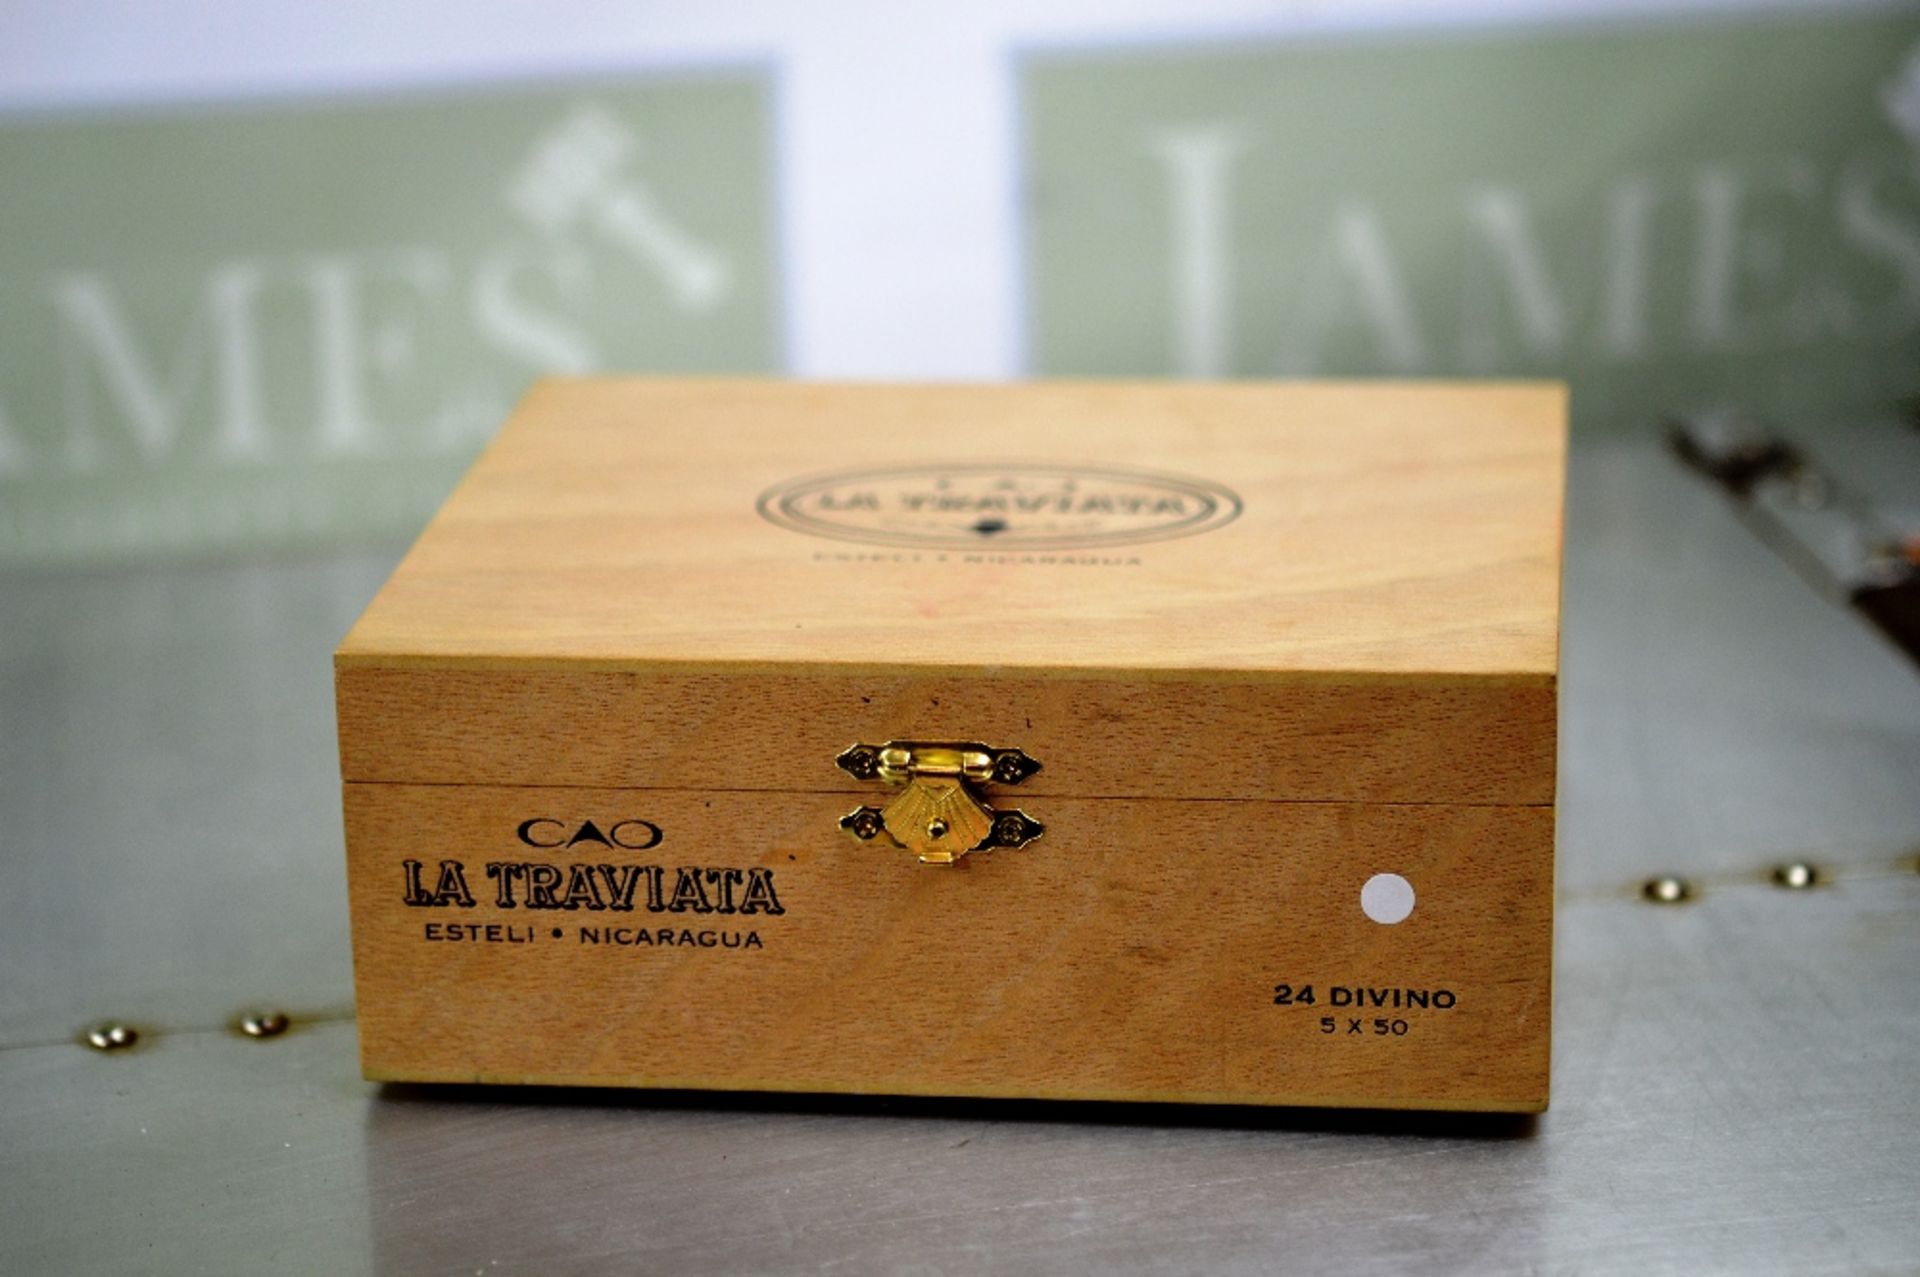 La Traviatta Top quality cigars in original case, imported - Image 2 of 2